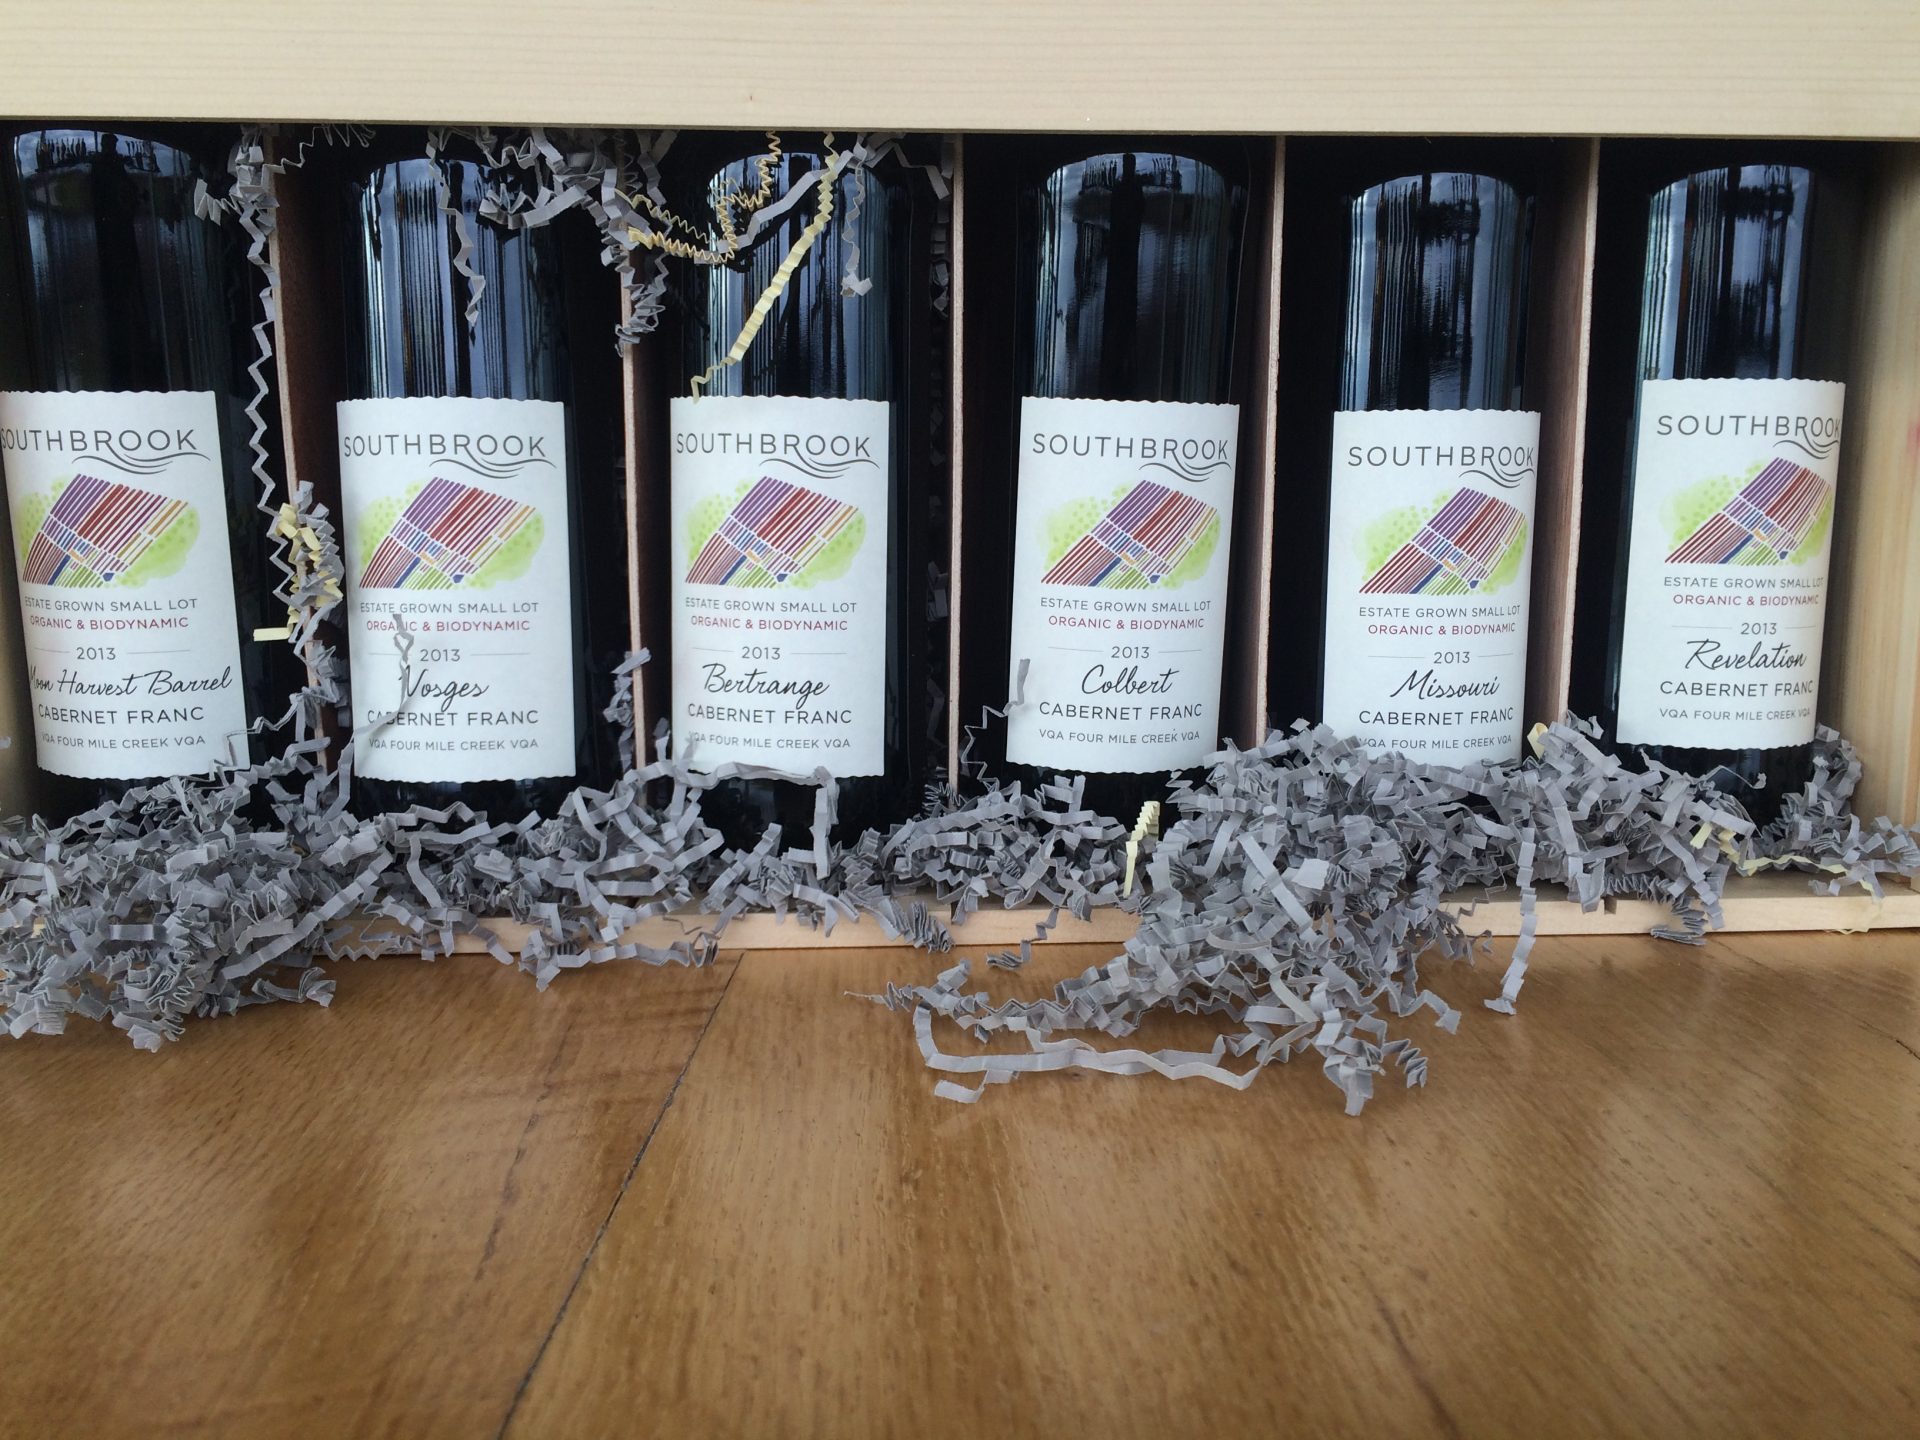 Chardonnay and Cabernet Franc Barrel Study Packs From Southbrook Vineyards